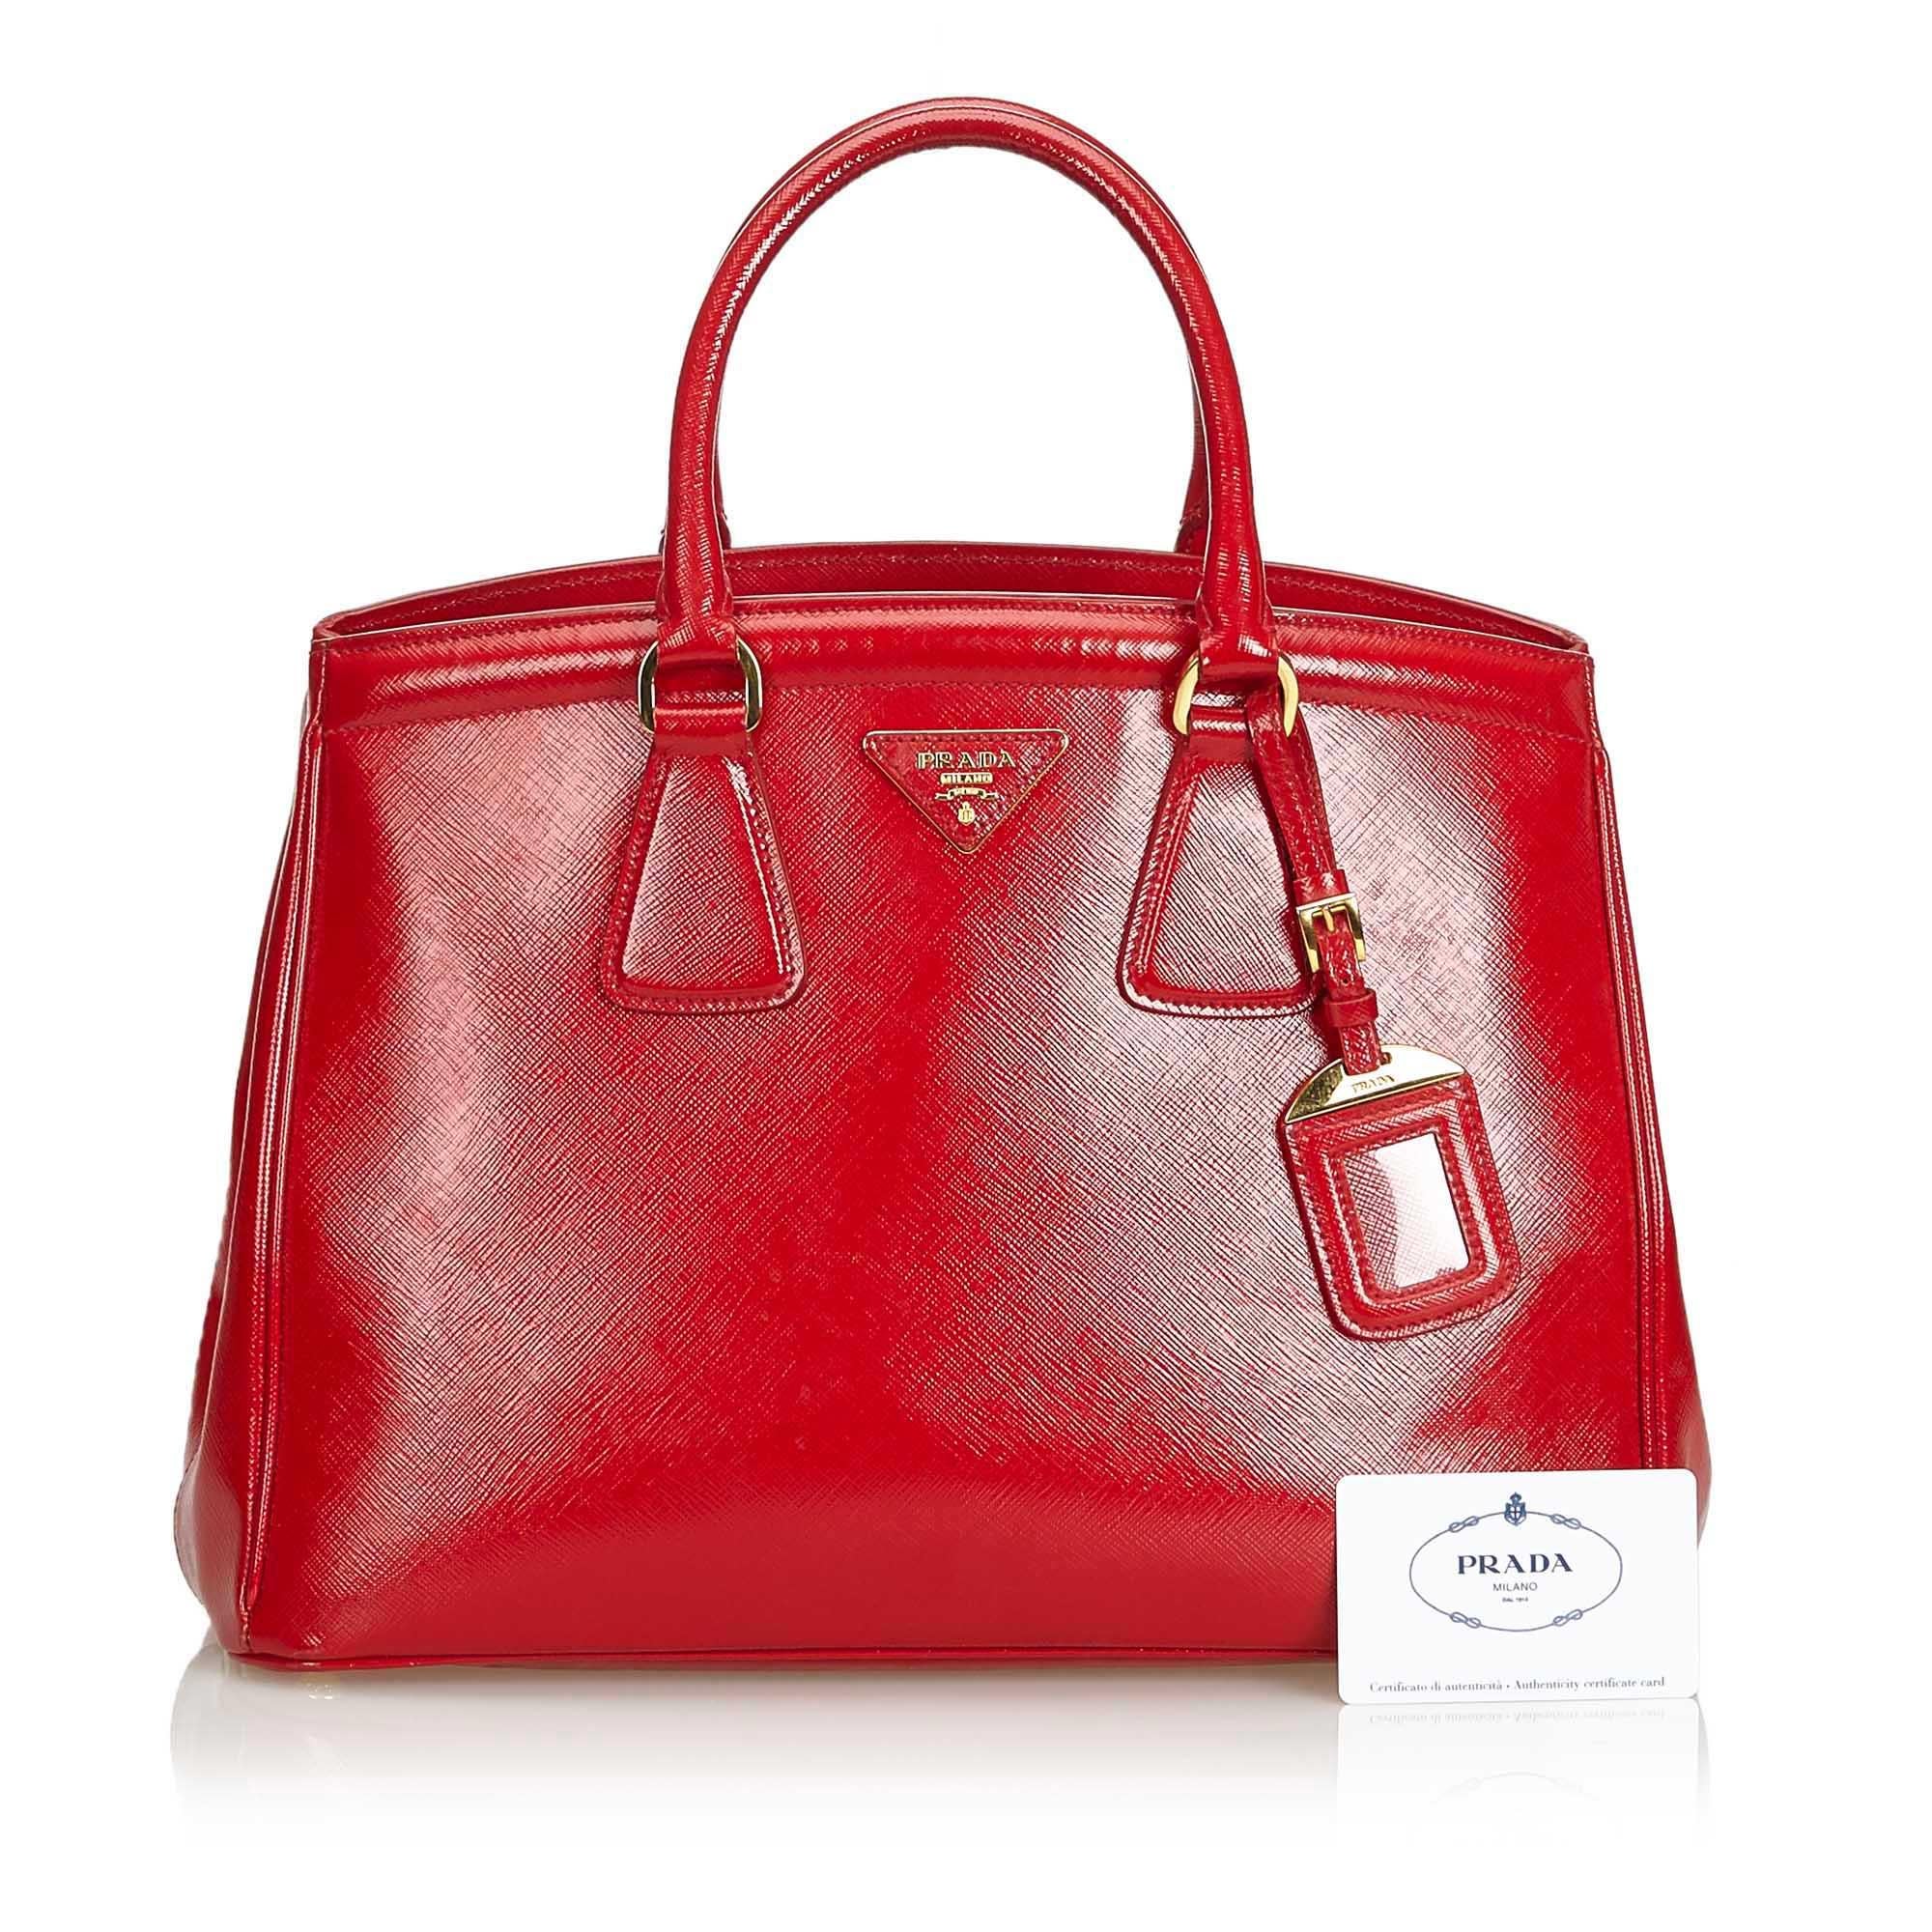 Prada Red  Leather Saffiano Lux Handbag Italy w/ Authenticity Card 10